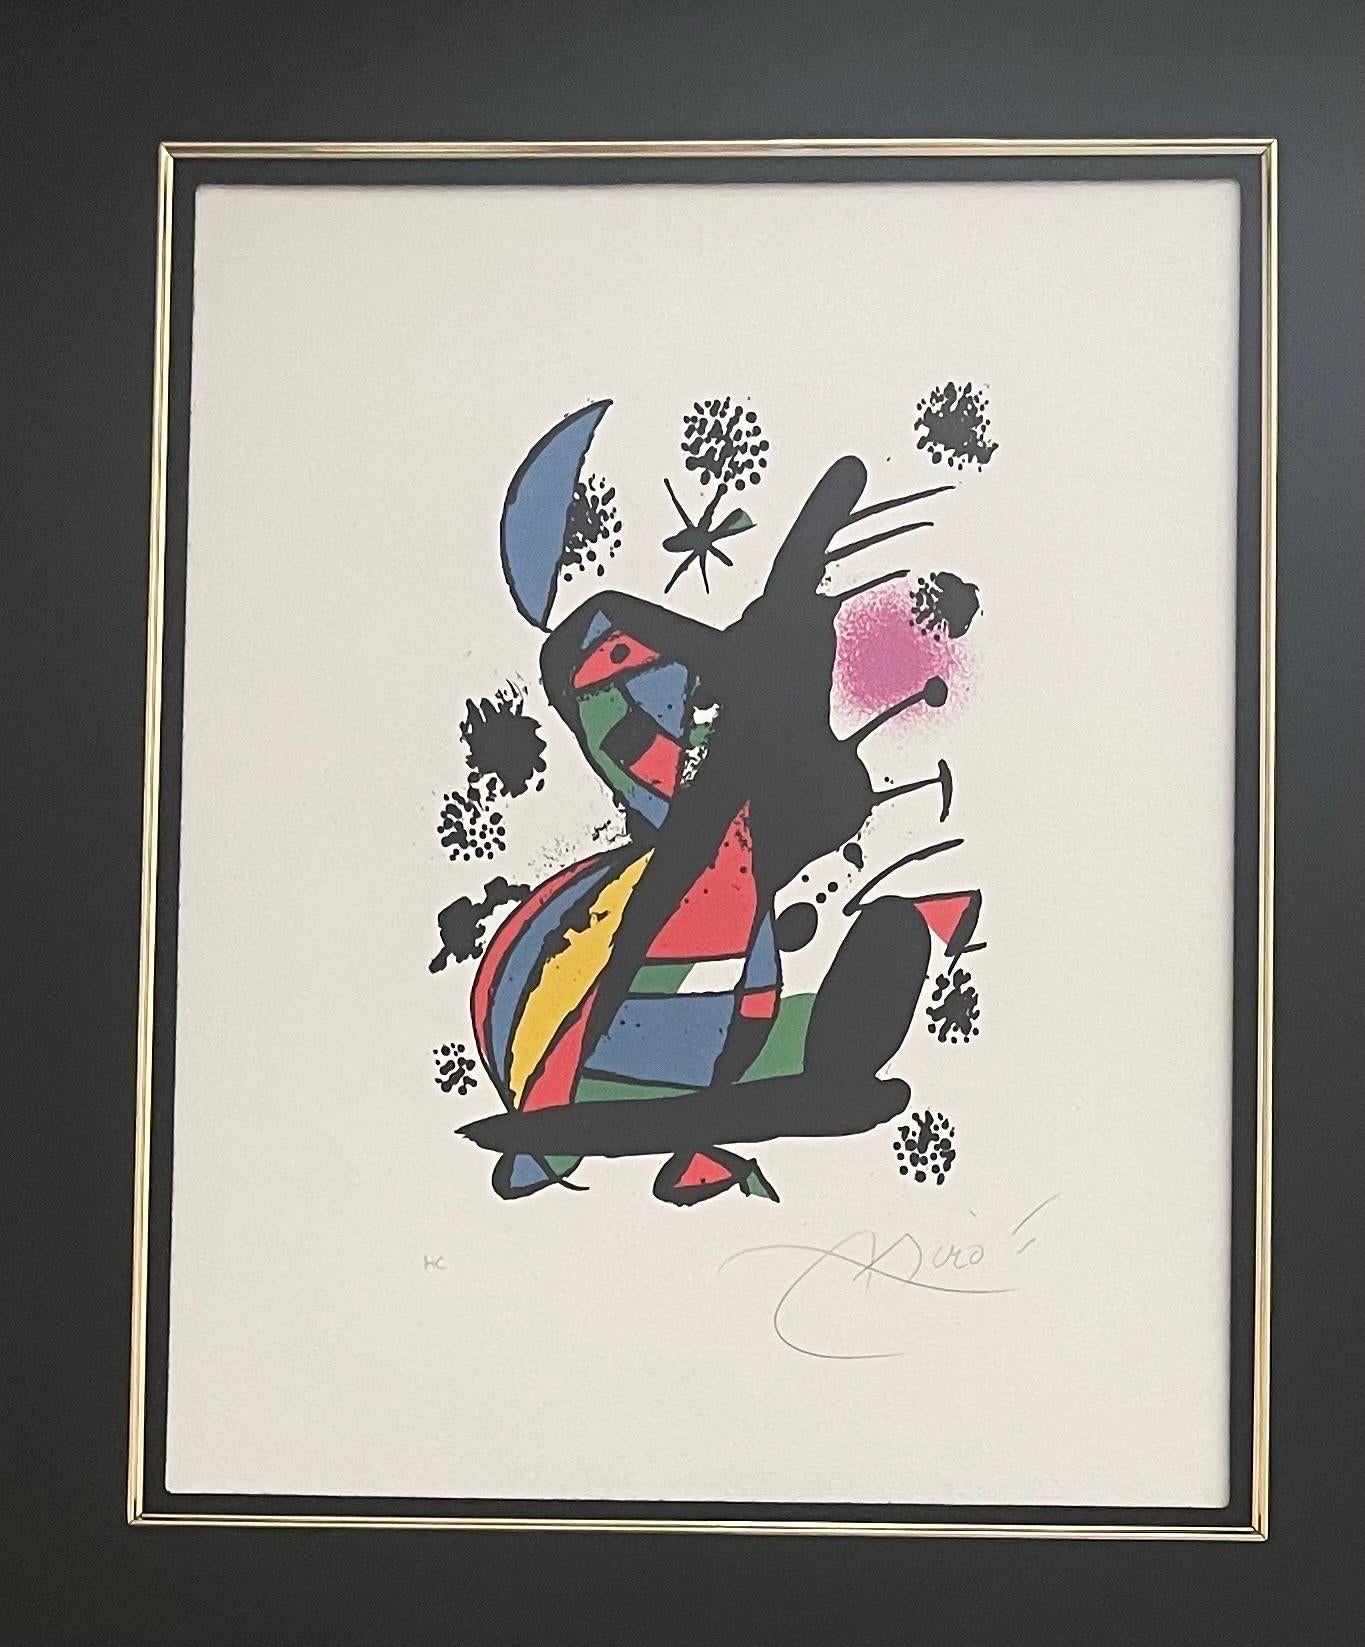 Litografía abstracta firmada por Joan Miró siglo XX en venta